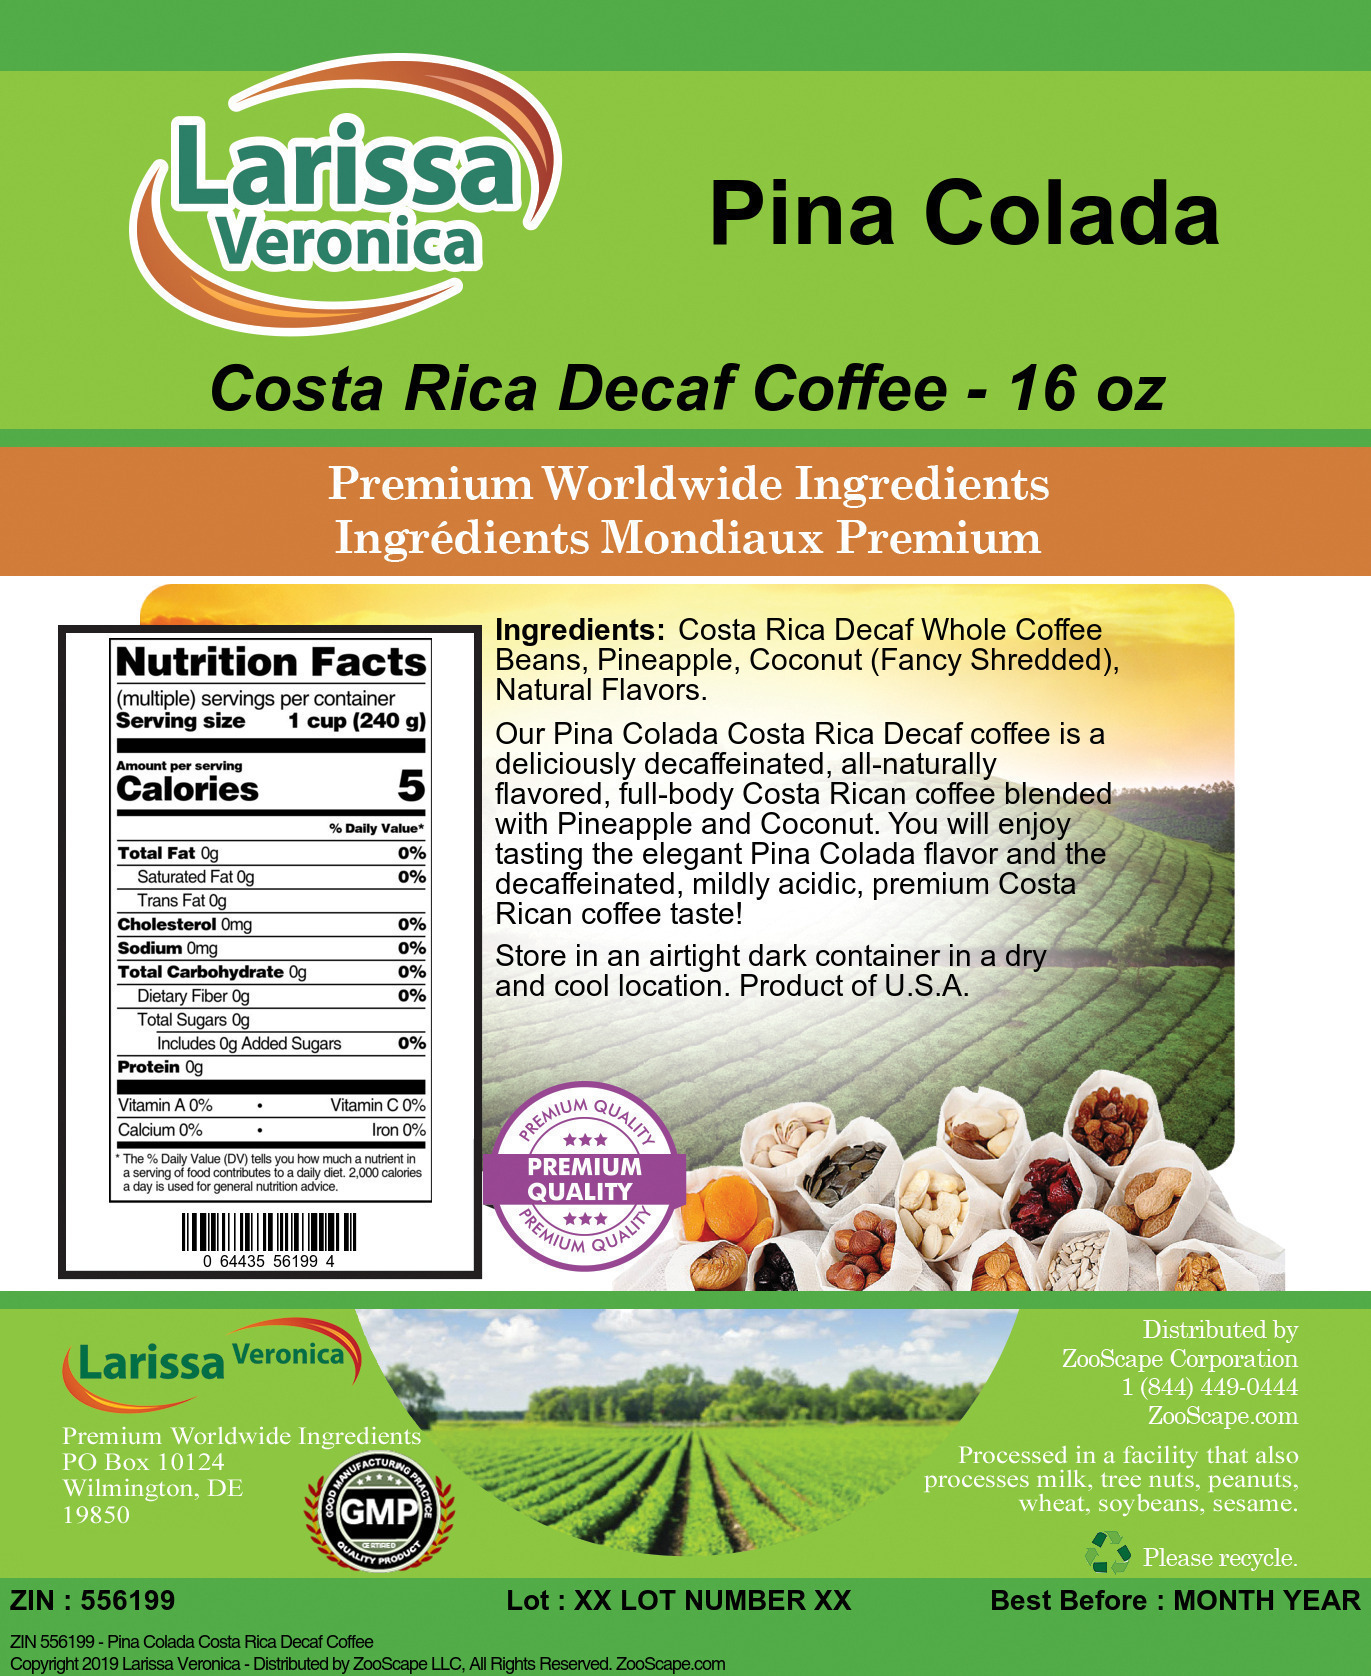 Pina Colada Costa Rica Decaf Coffee - Label